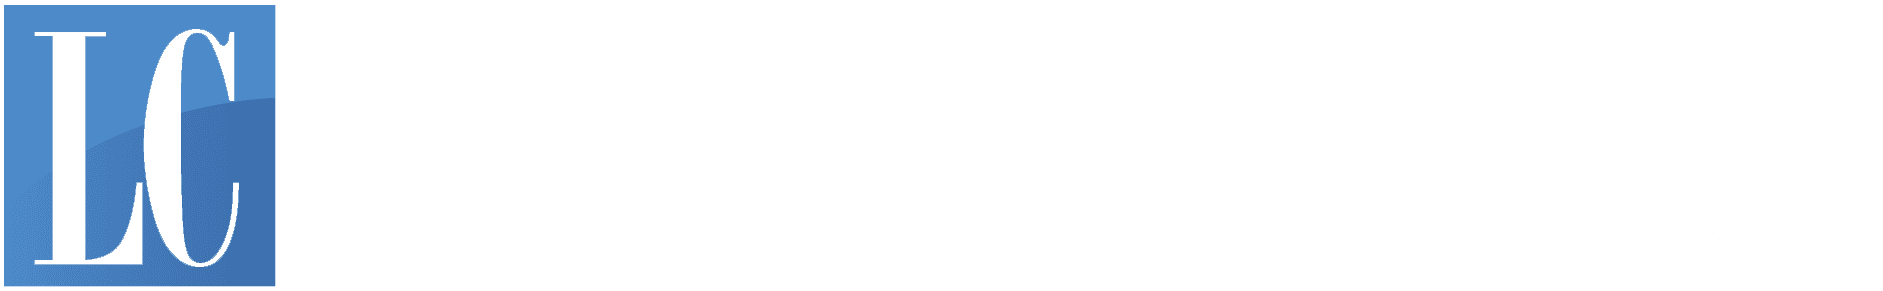 Lawton Cates Logo